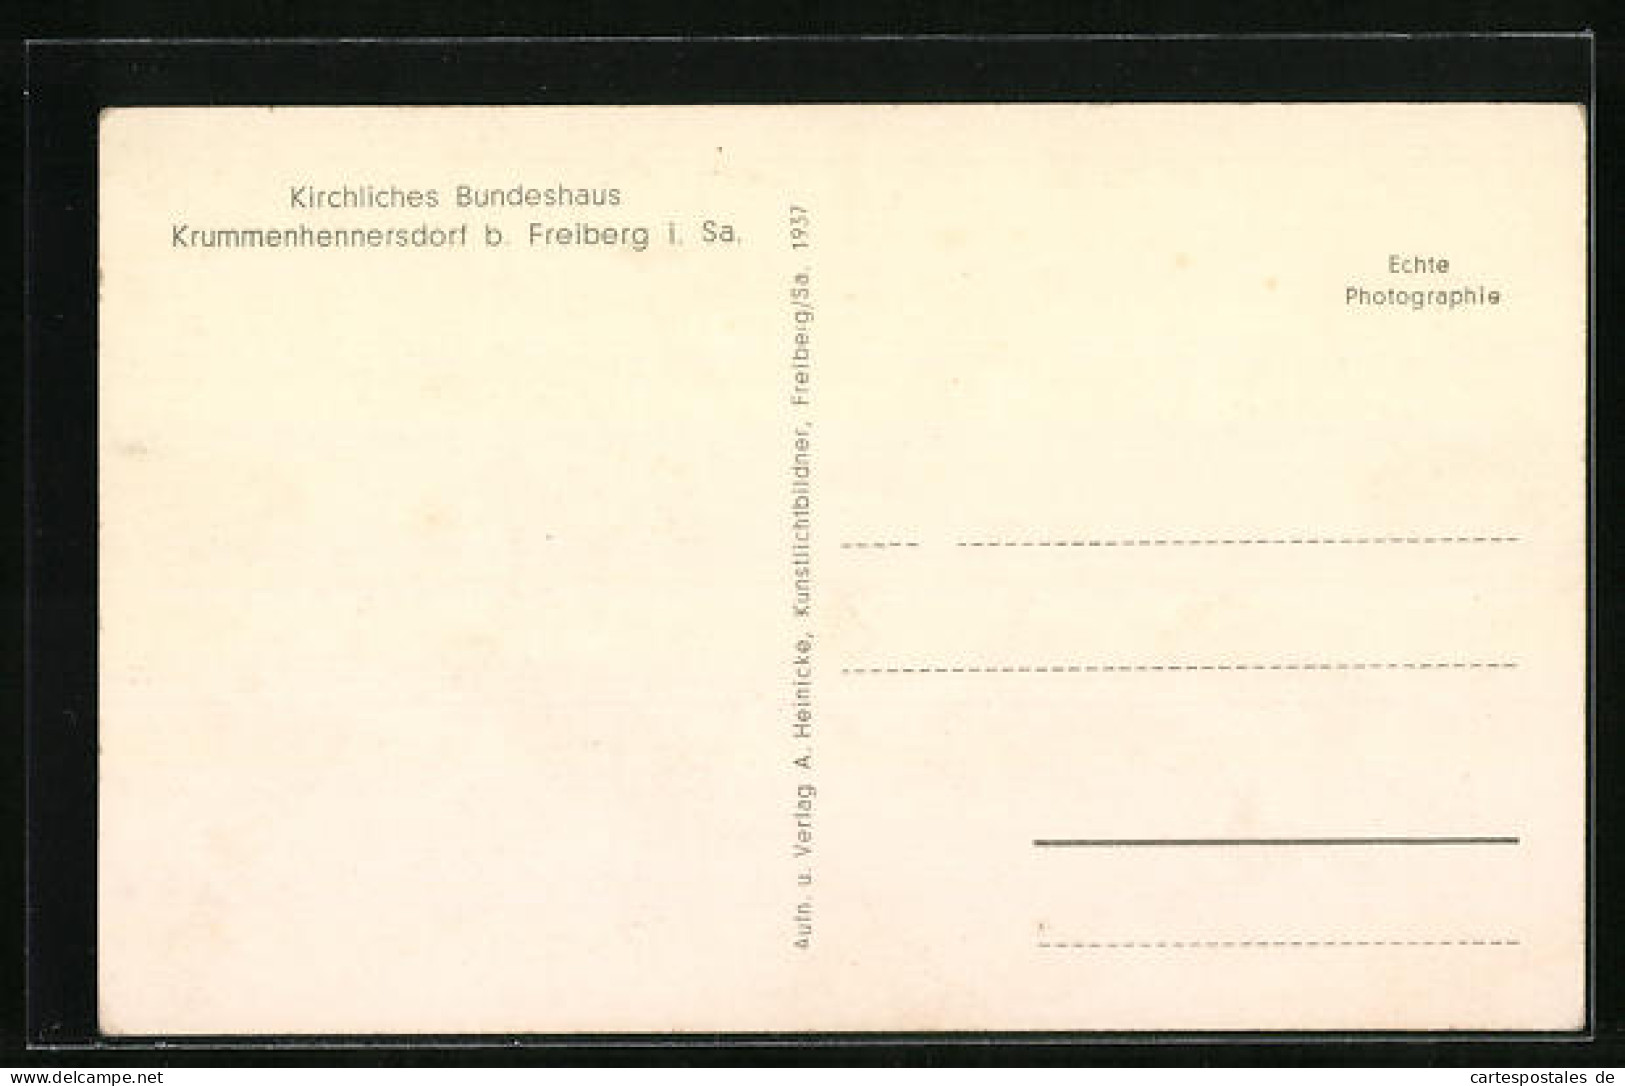 AK Krummenhennersdorf B. Freiberg, Kirchliches Bundeshaus  - Freiberg (Sachsen)